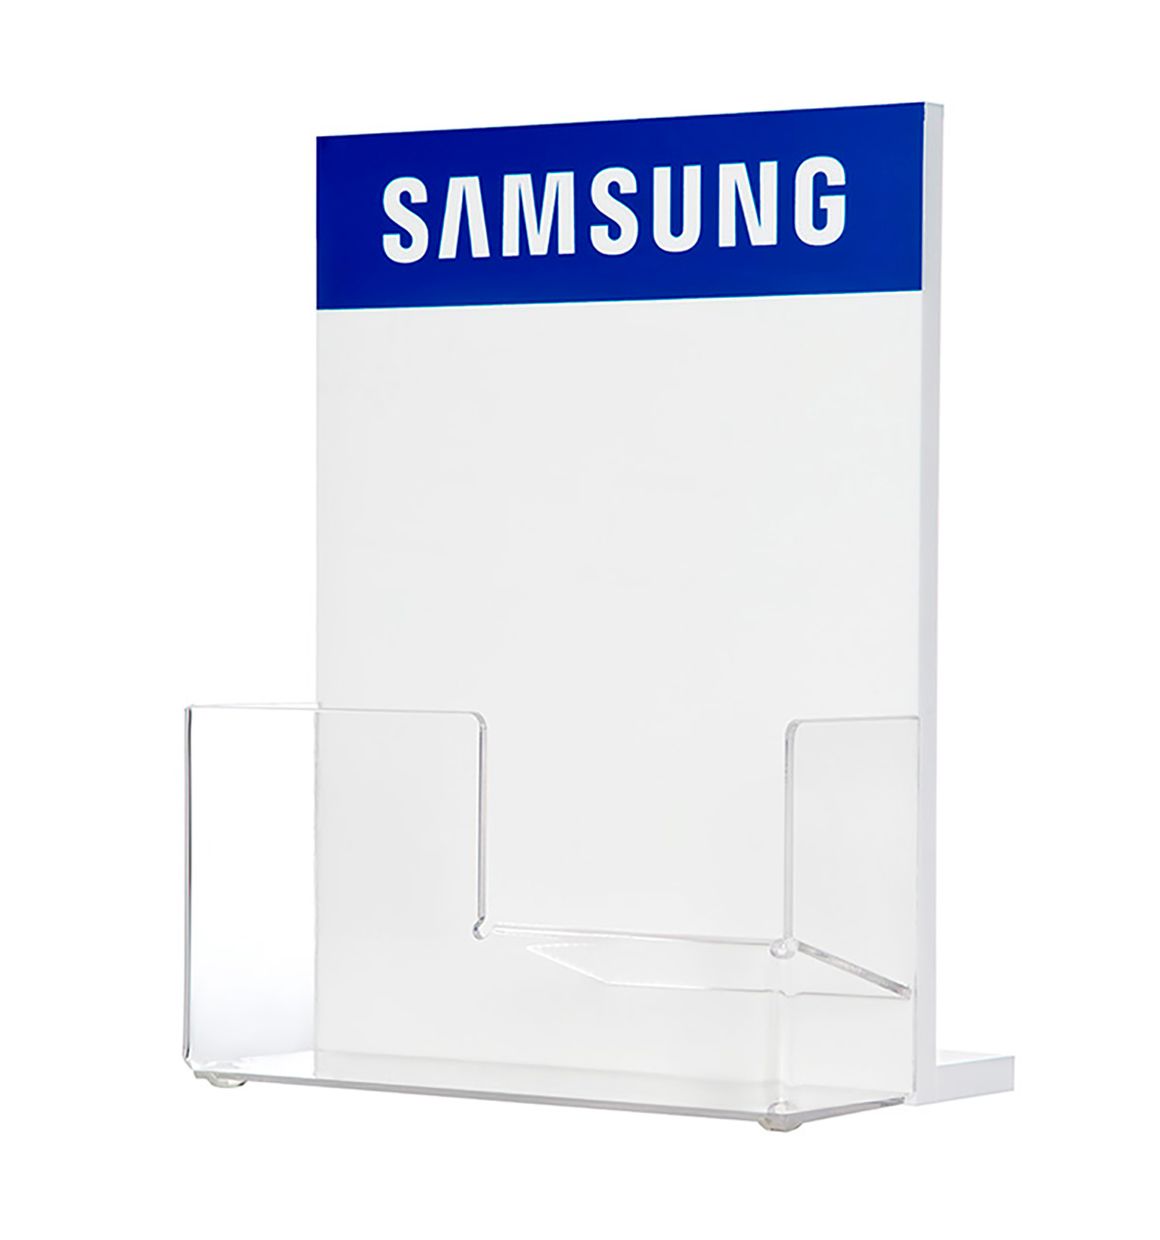 Presentation display for Samsung